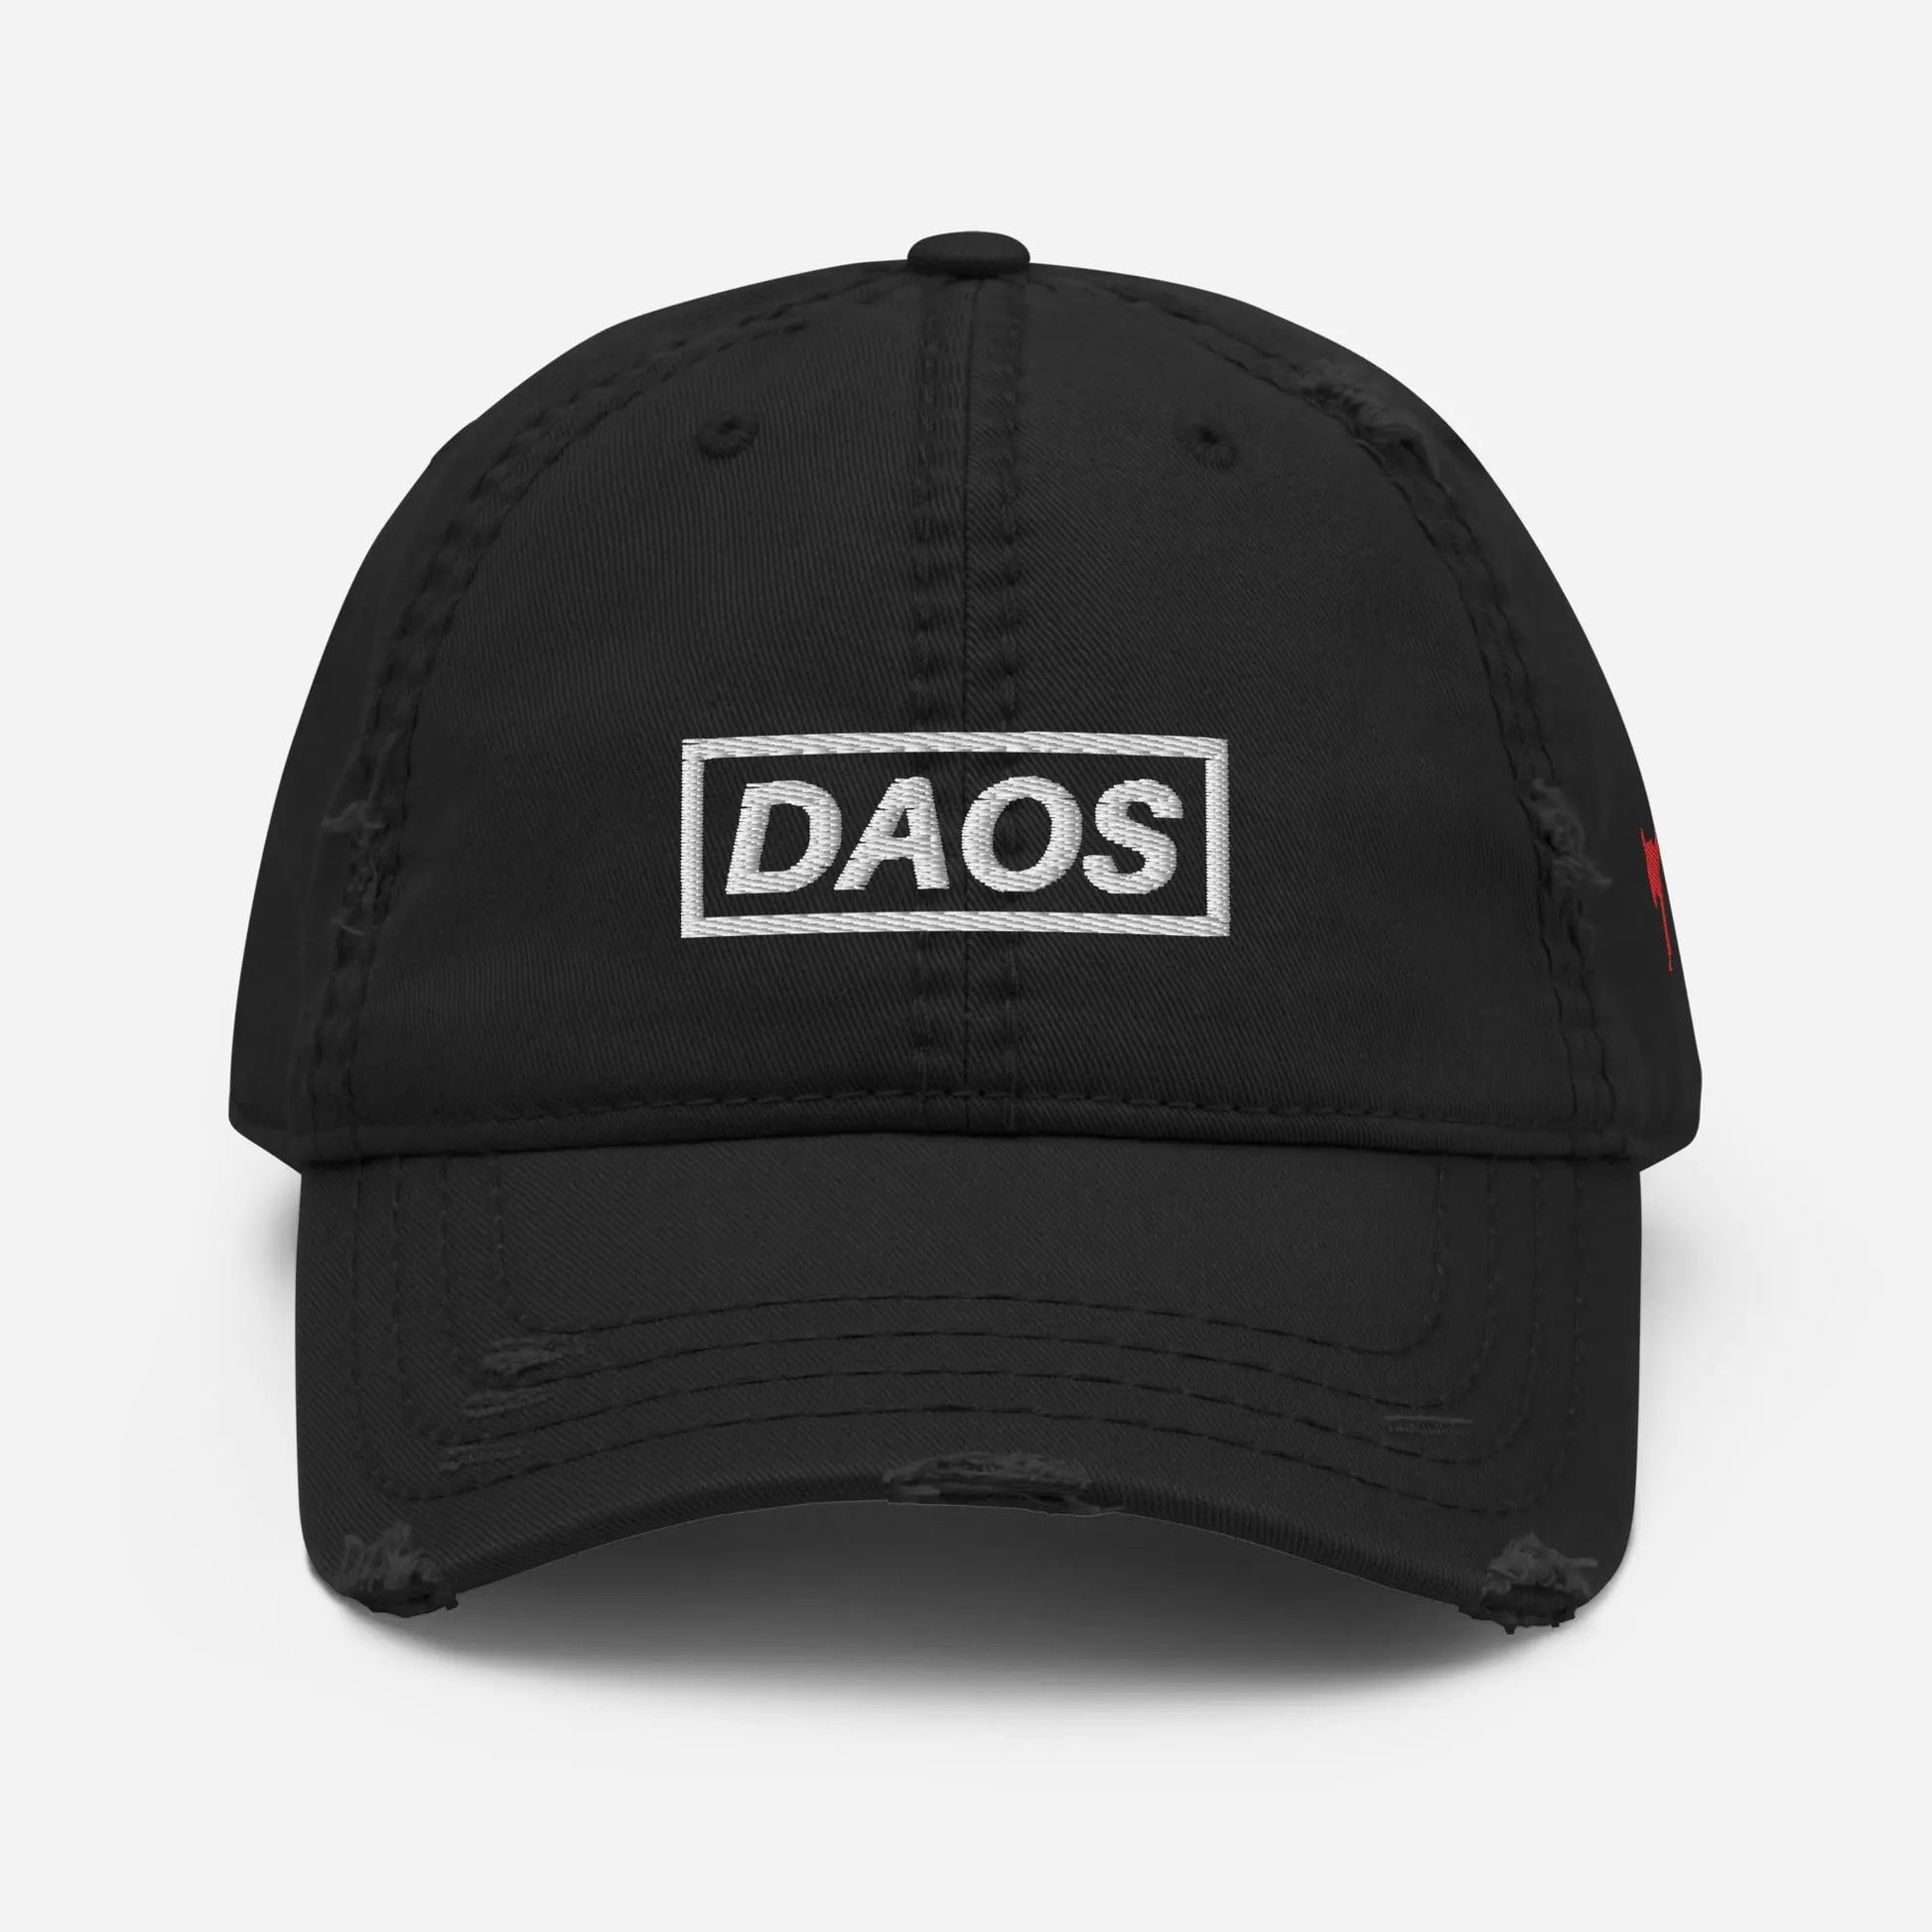 DAOS Distressed Hat deadlyartofsurvival.com